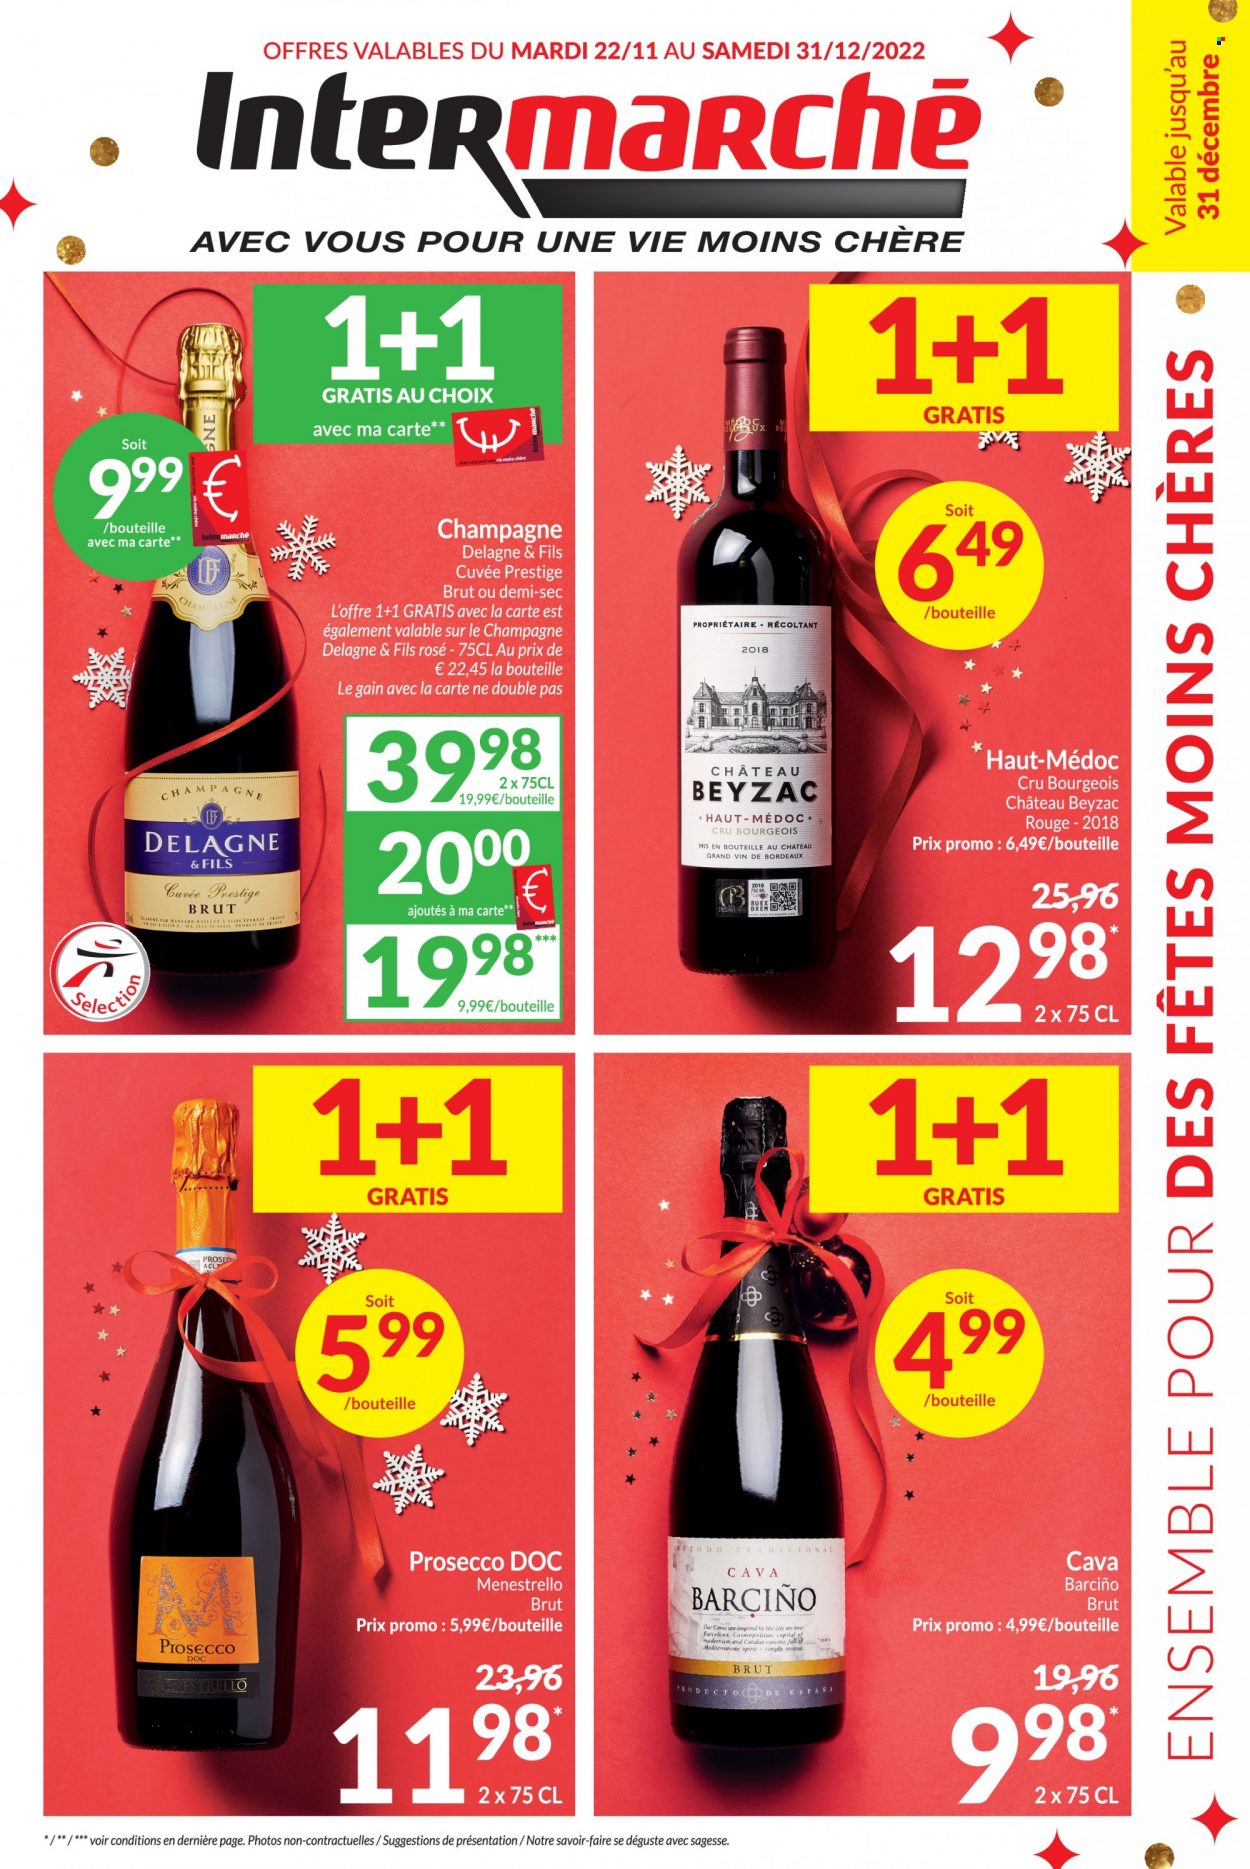 thumbnail - Intermarché-aanbieding - 22/11/2022 - 31/12/2022 -  producten in de aanbieding - champagne, Cava, prosecco, Bordeaux. Pagina 1.